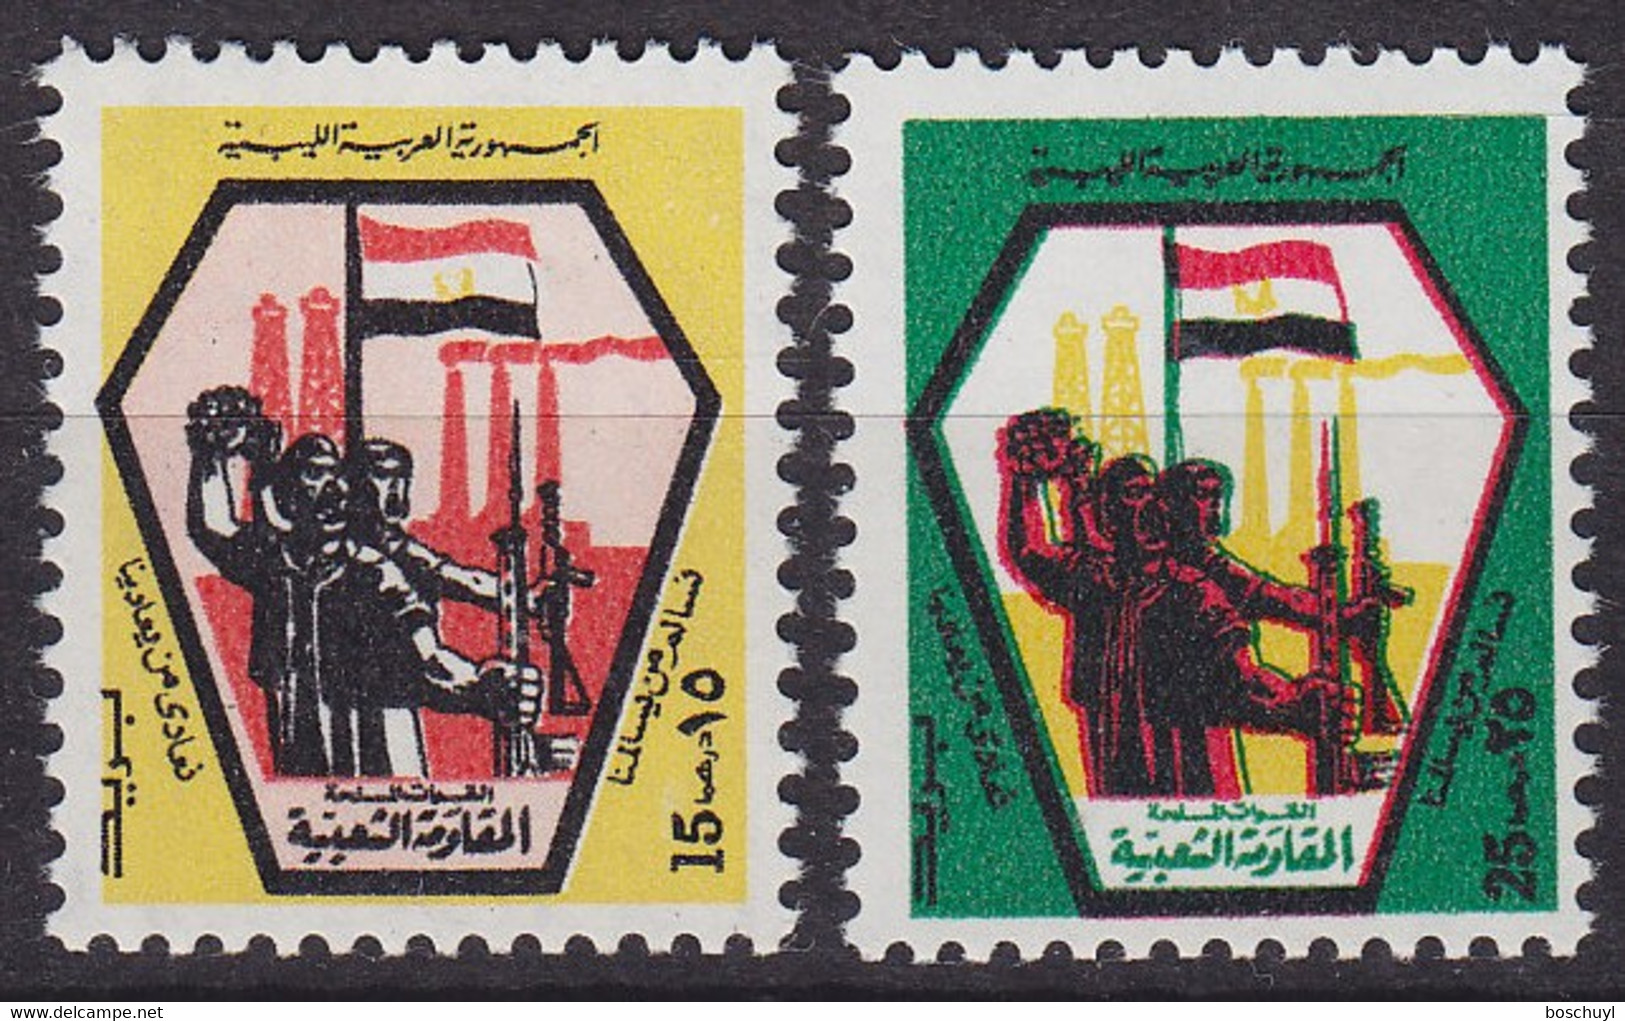 Libya, 1973, Public Resistance, MNH, Michel 433-434 - Libya